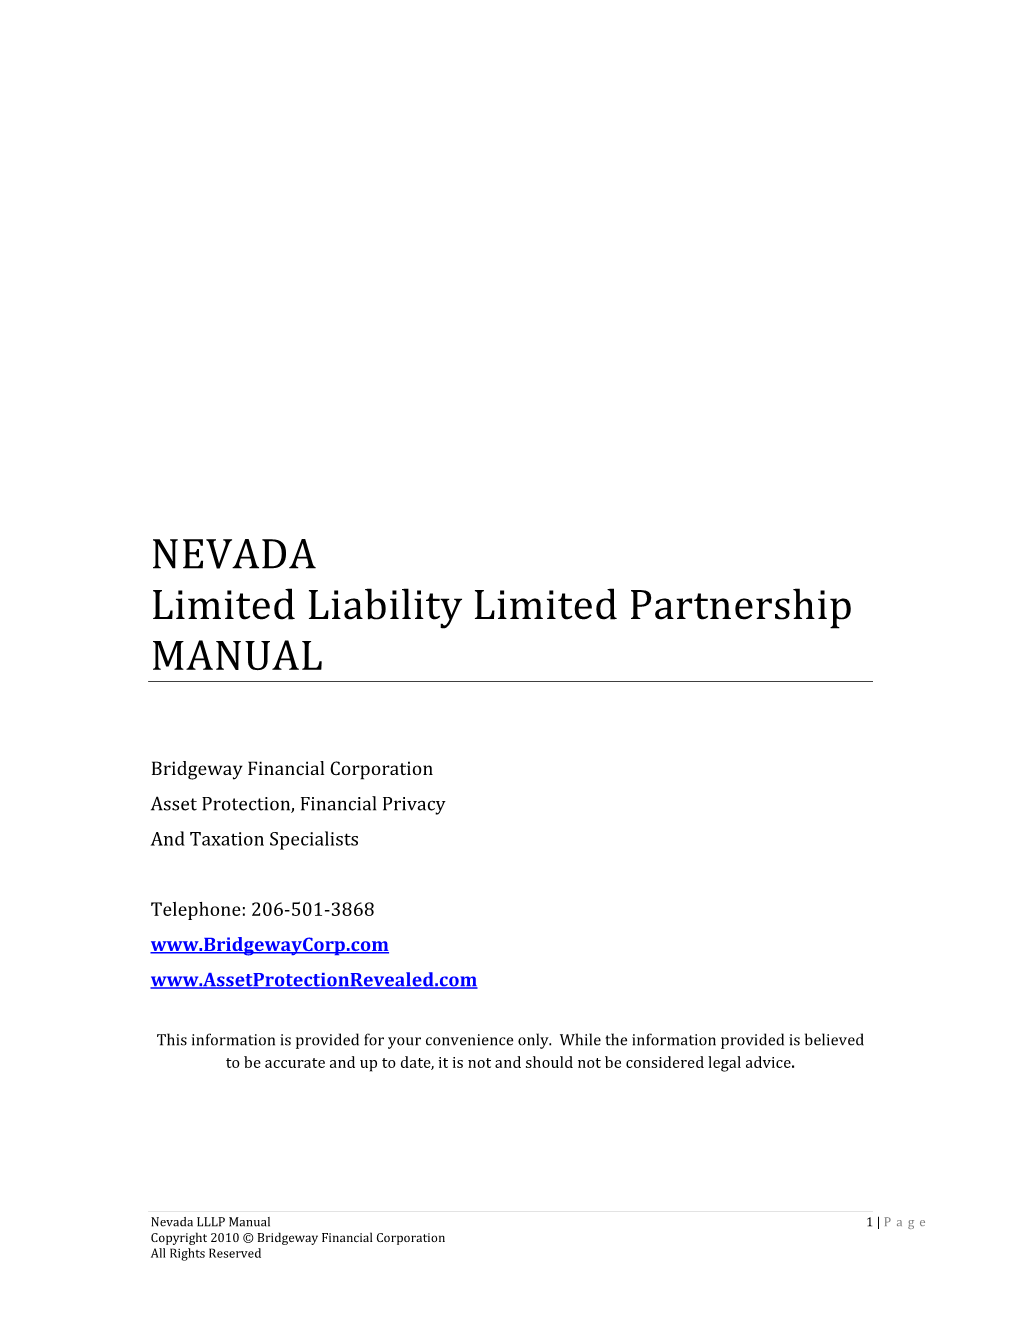 NEVADA Limited Liability Limited Partnership MANUAL